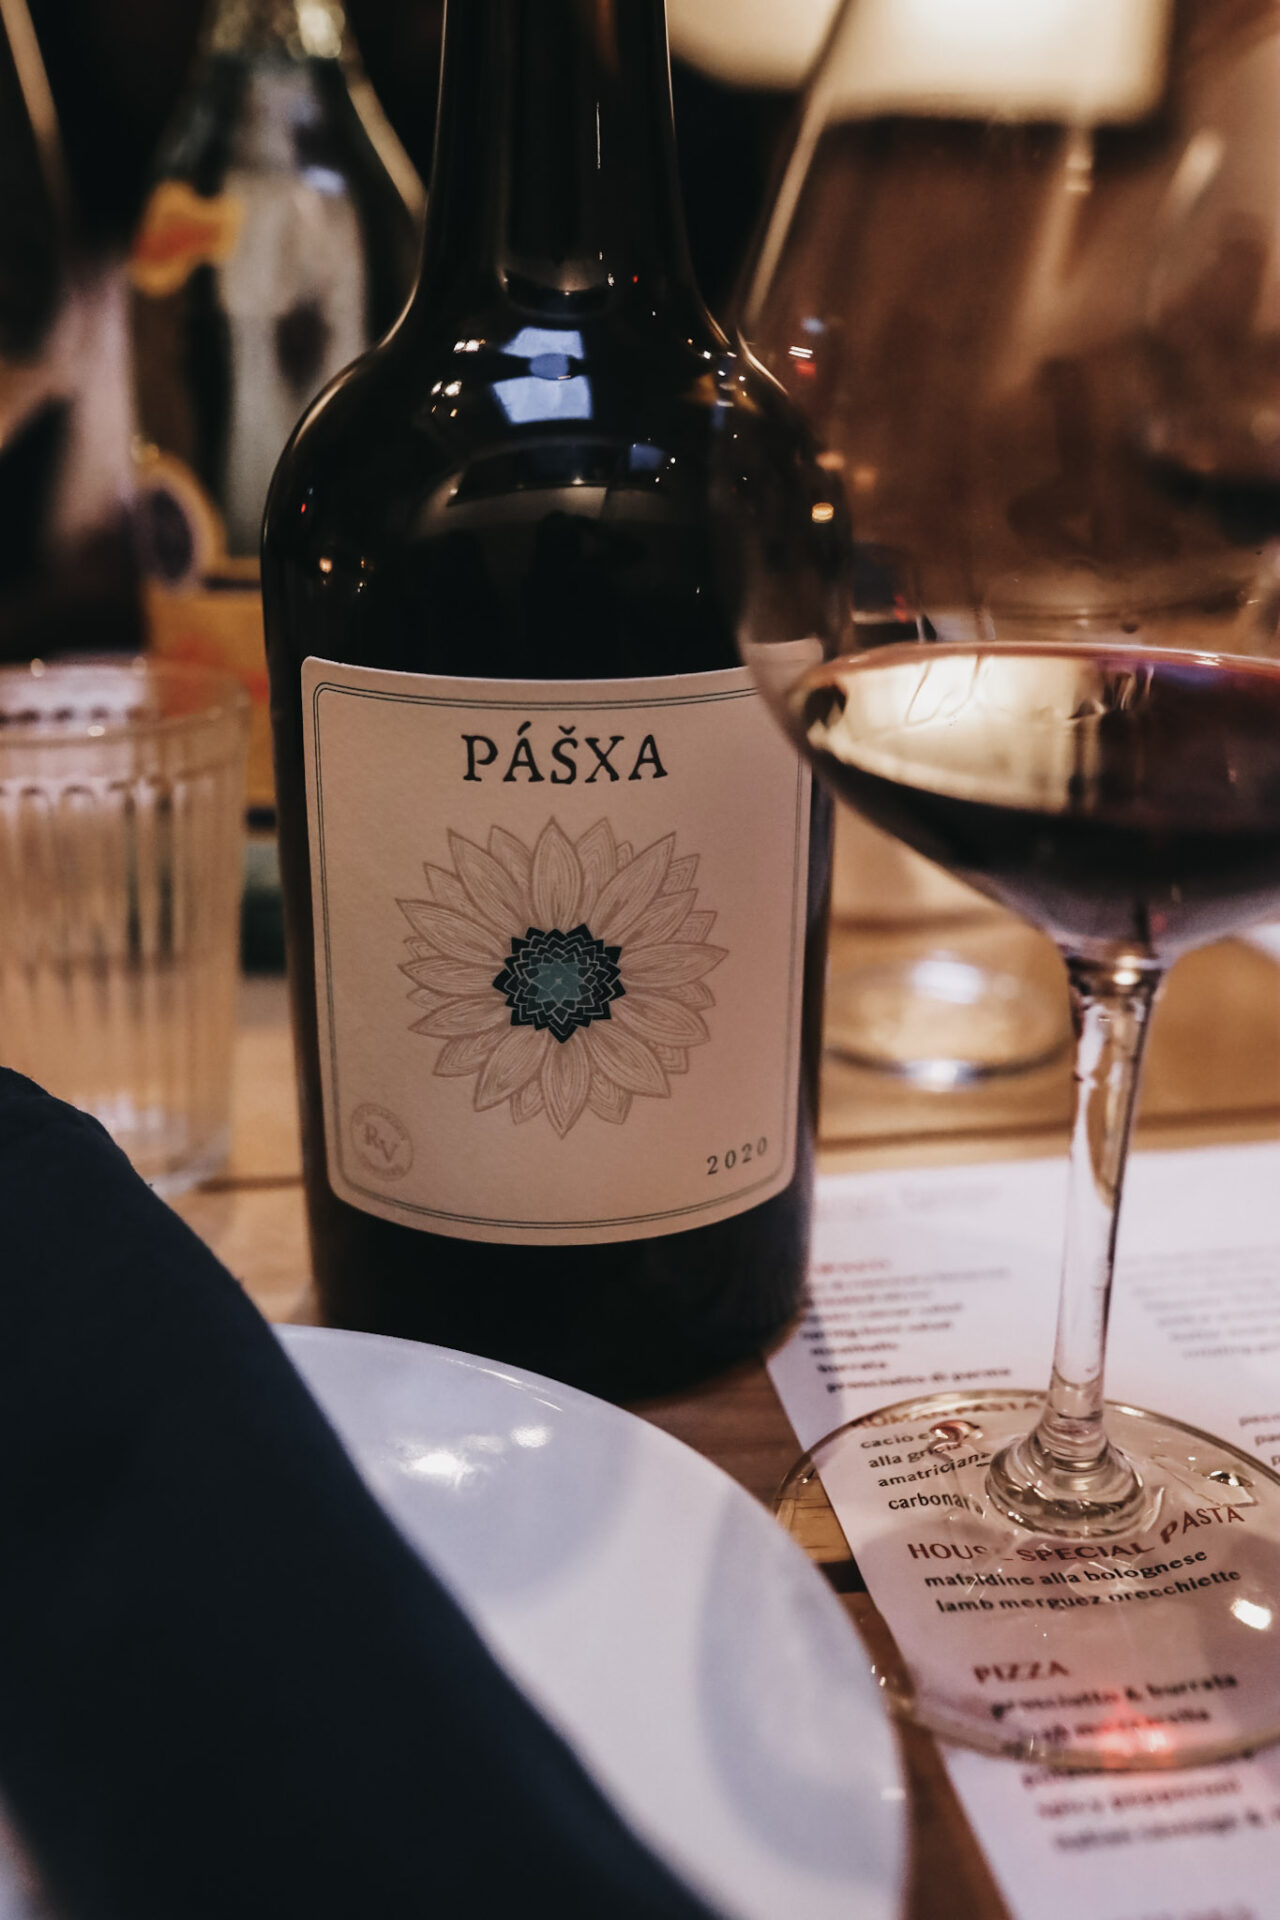 Bottle of Pasxa wine on dinner table